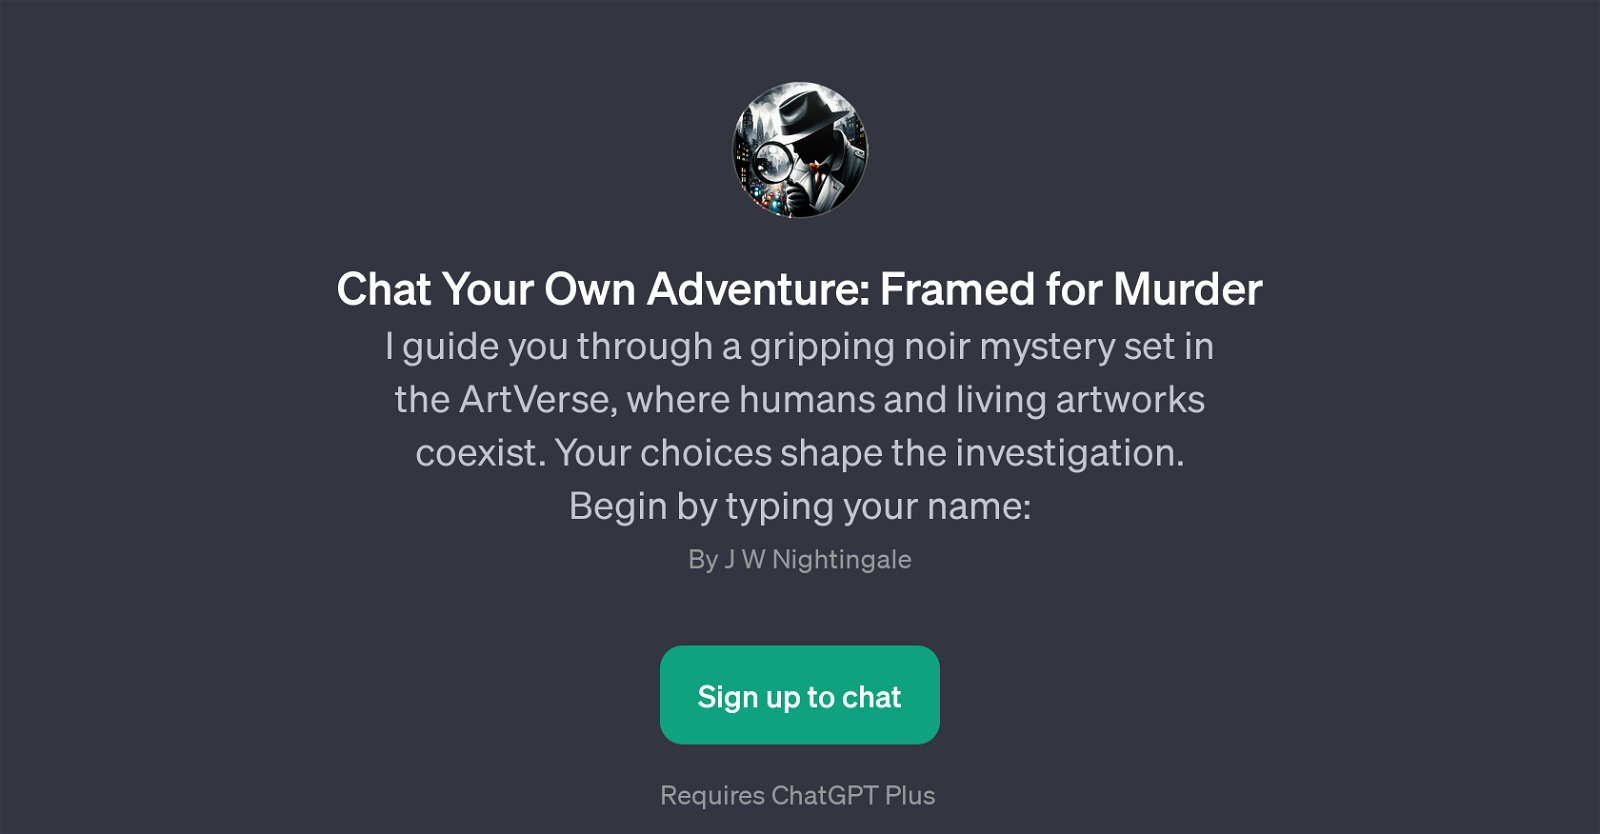 Chat Your Own Adventure: Framed for Murder website